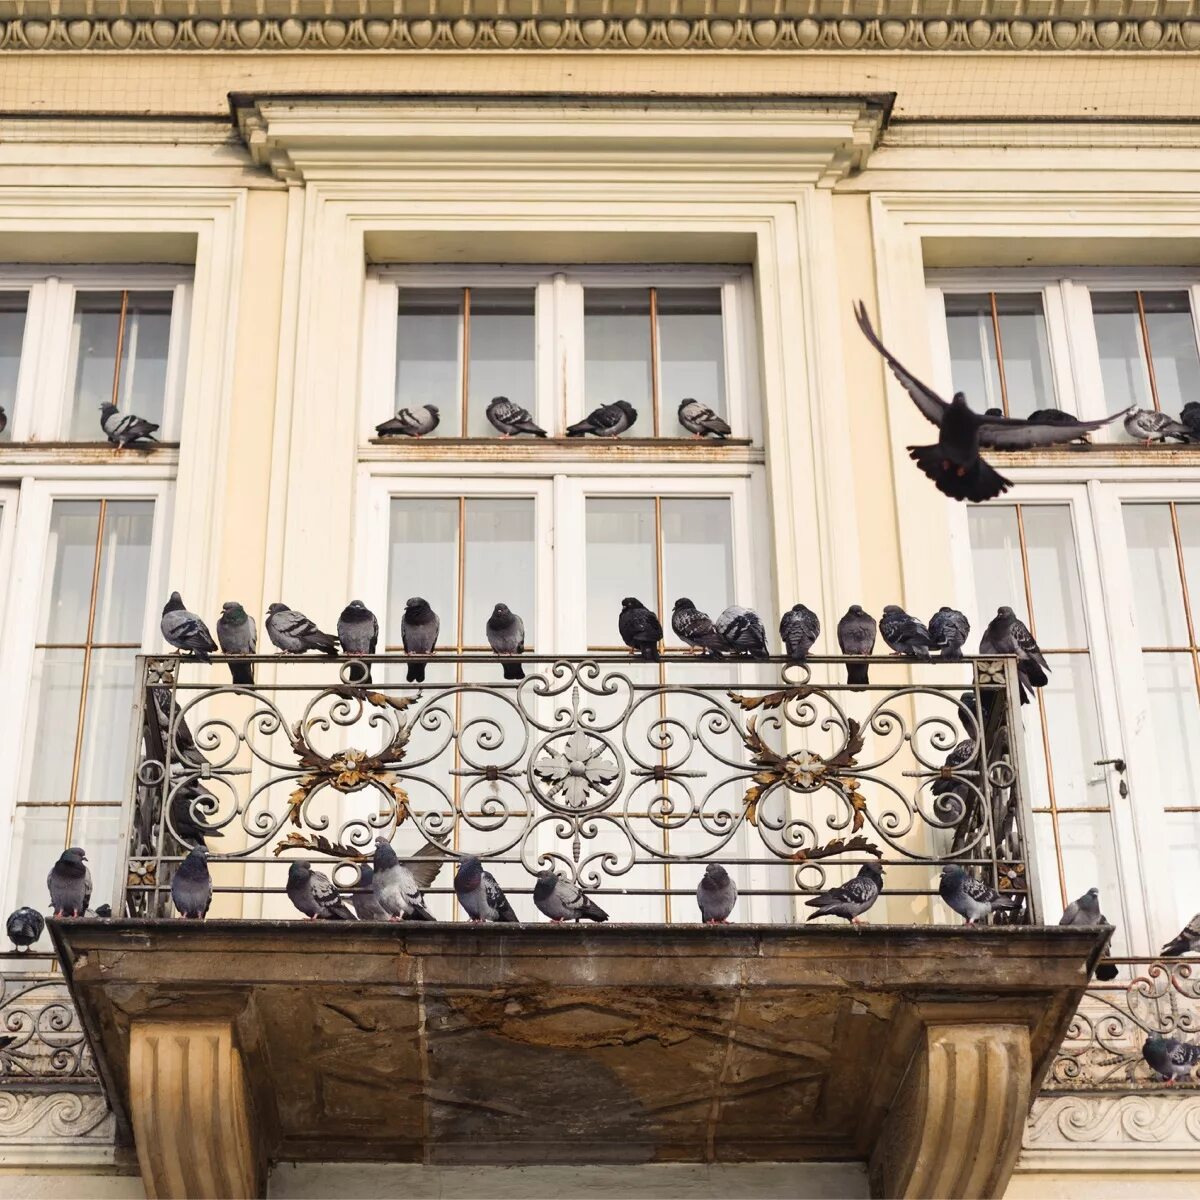 Гнездо голубя на балконе примета. Голуби на балконе. Голубятник на балконе. Гнездо на балконе. Гнездо голубя на балконе.